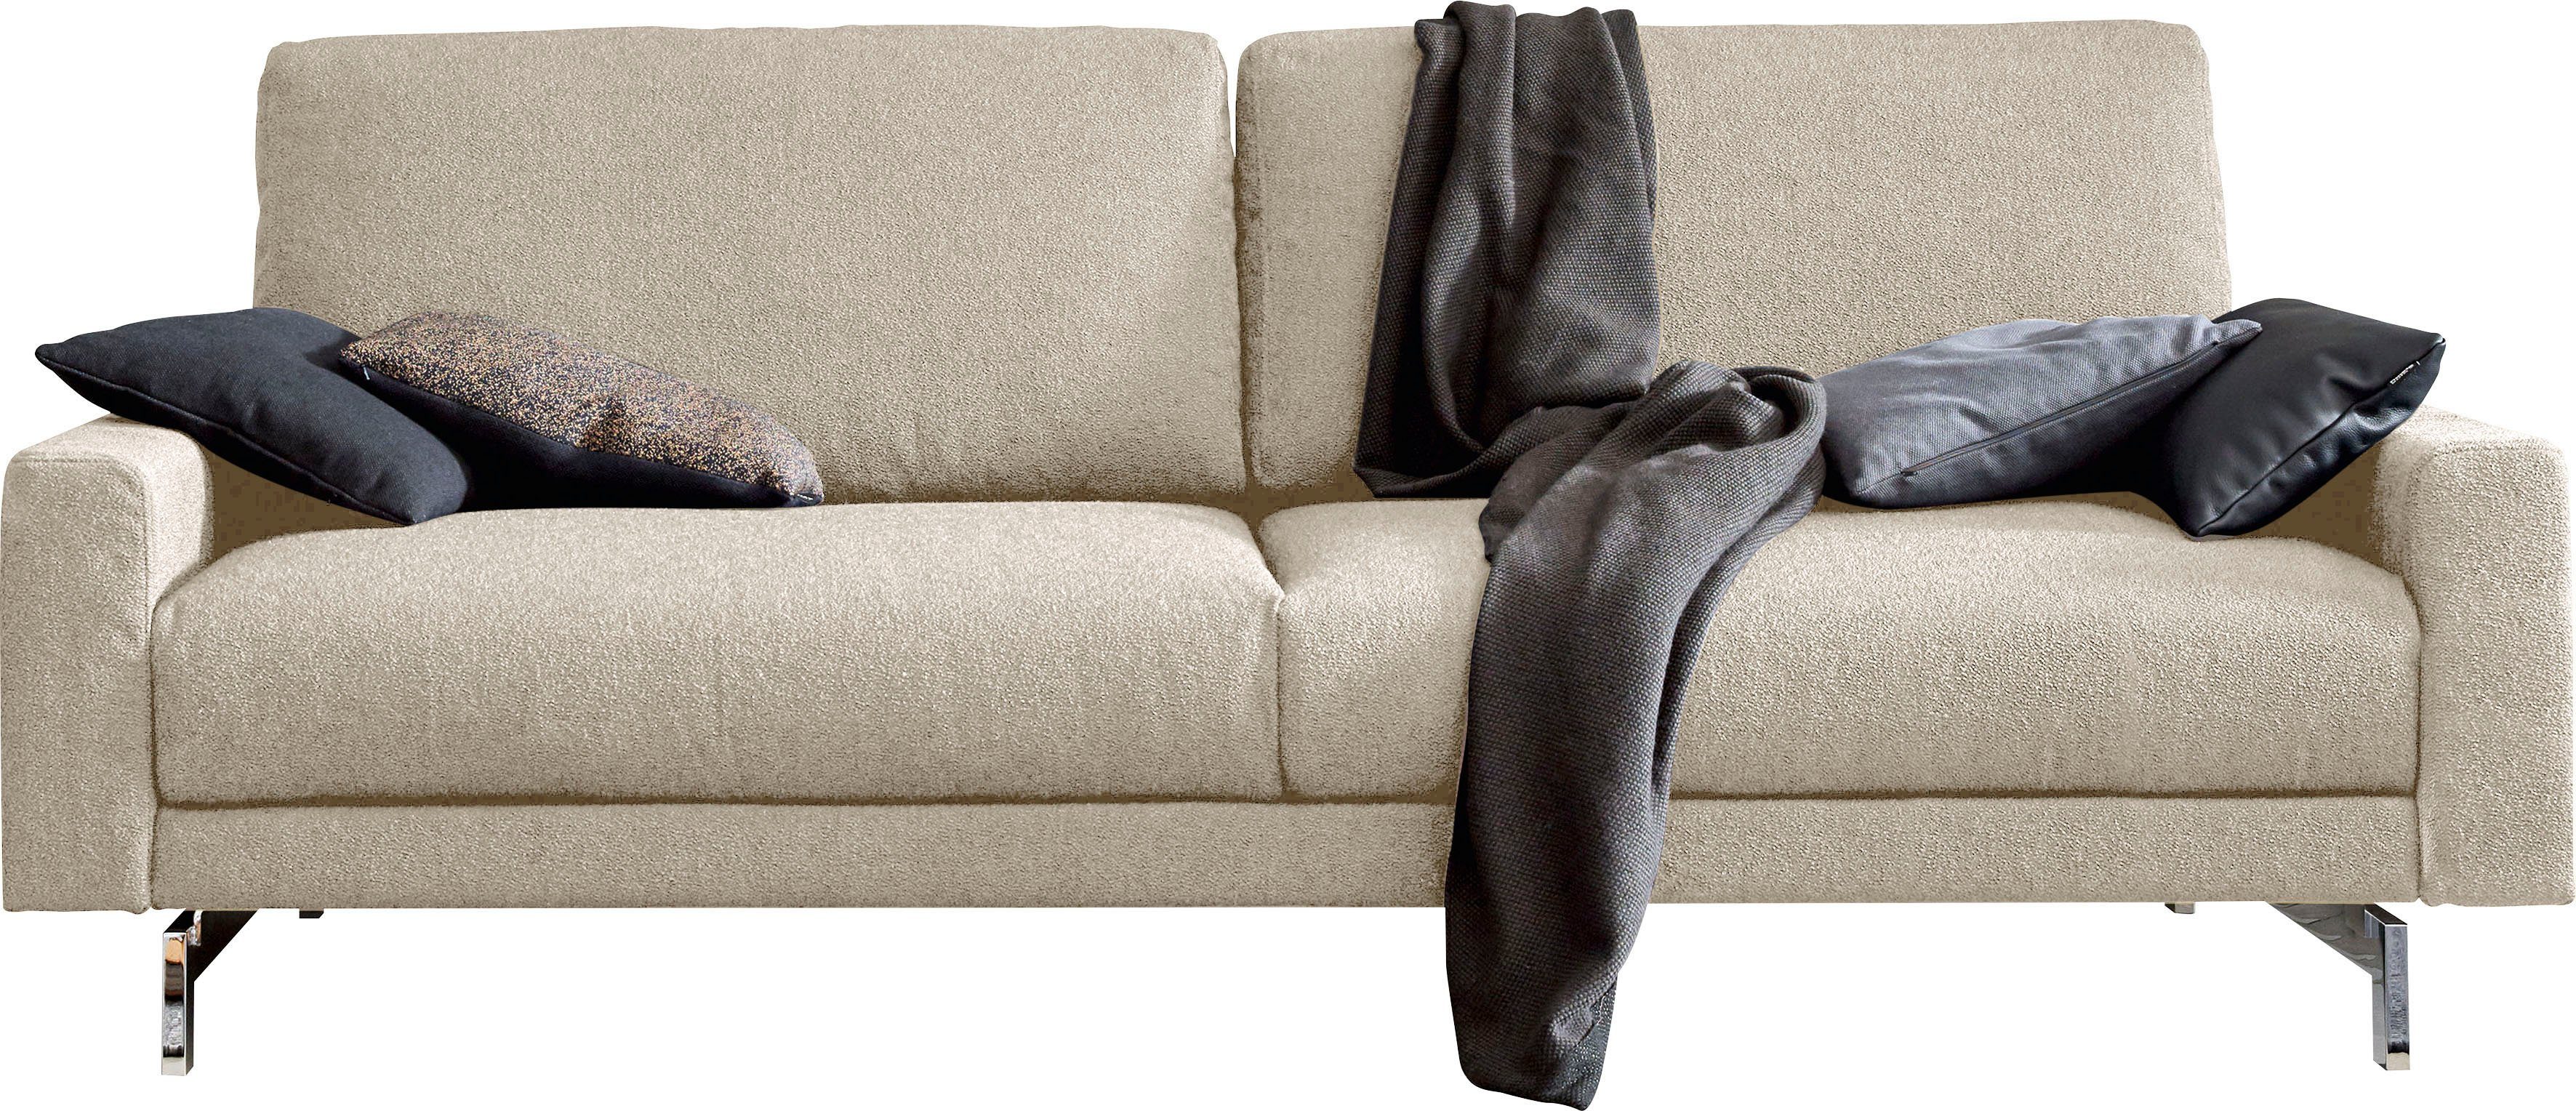 2,5-Sitzer Breite hs.450, Armlehne glänzend, sofa hülsta 184 cm chromfarben niedrig, Fuß